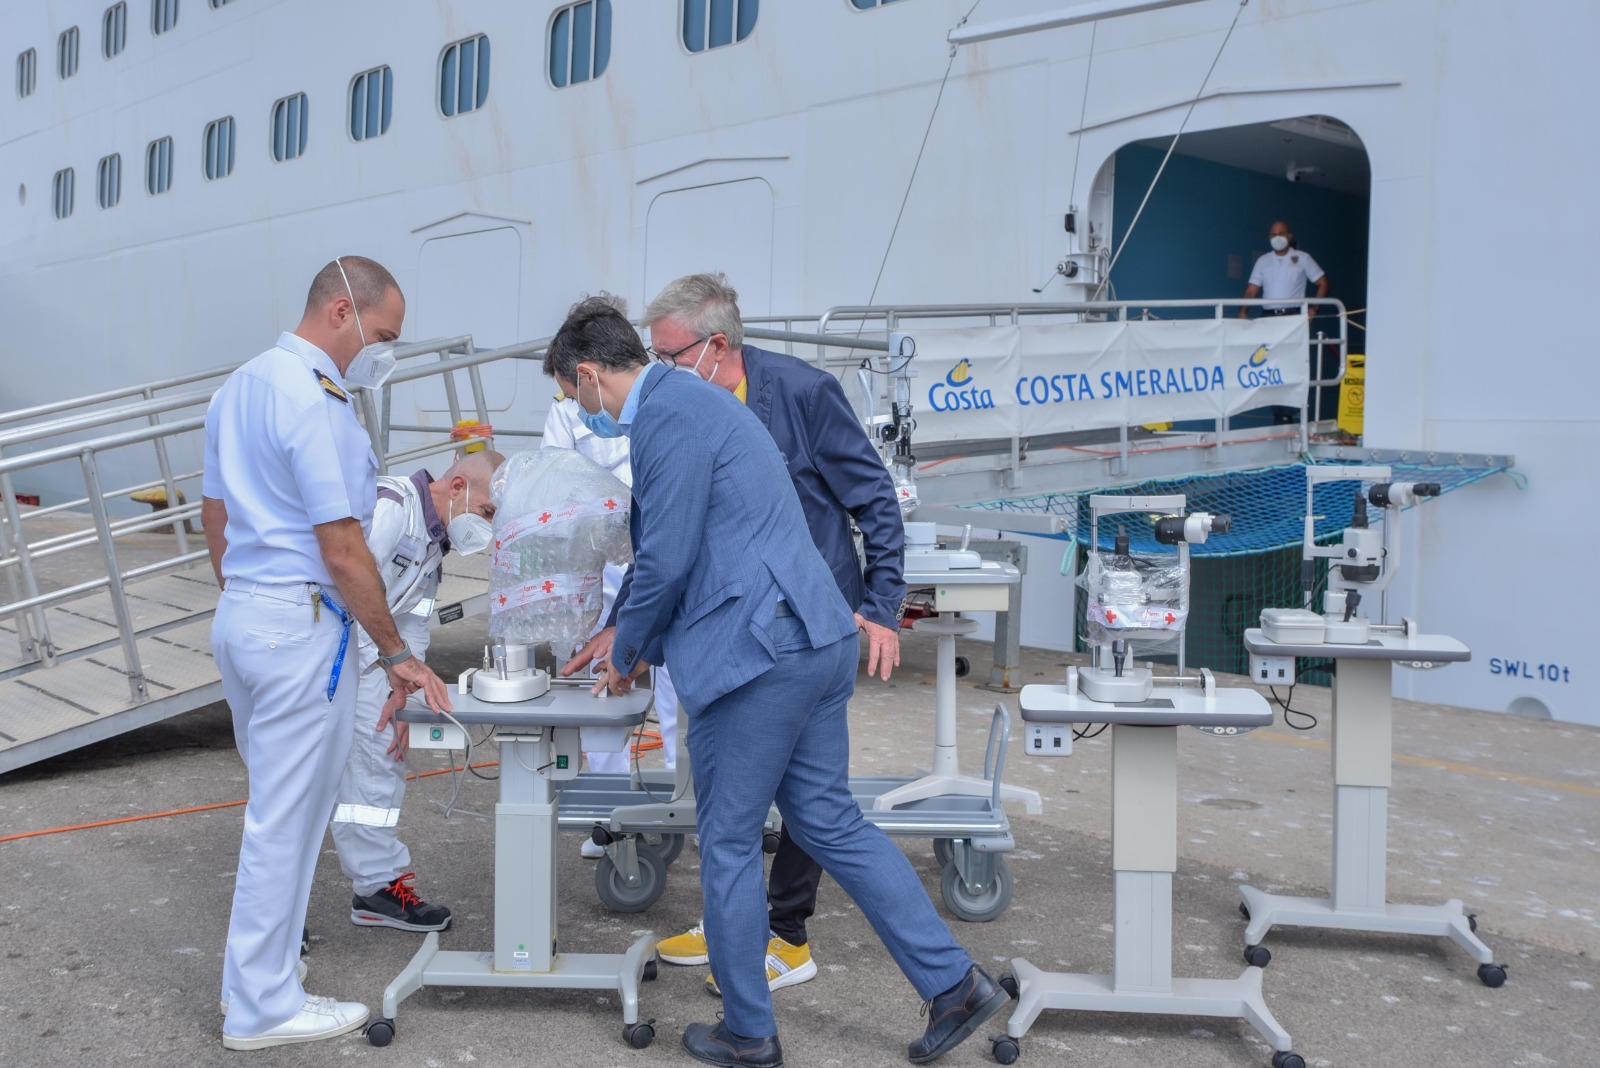 World Medical Aid e Costa Crociere dona a World Medical Aid 5 Lampade a fessura